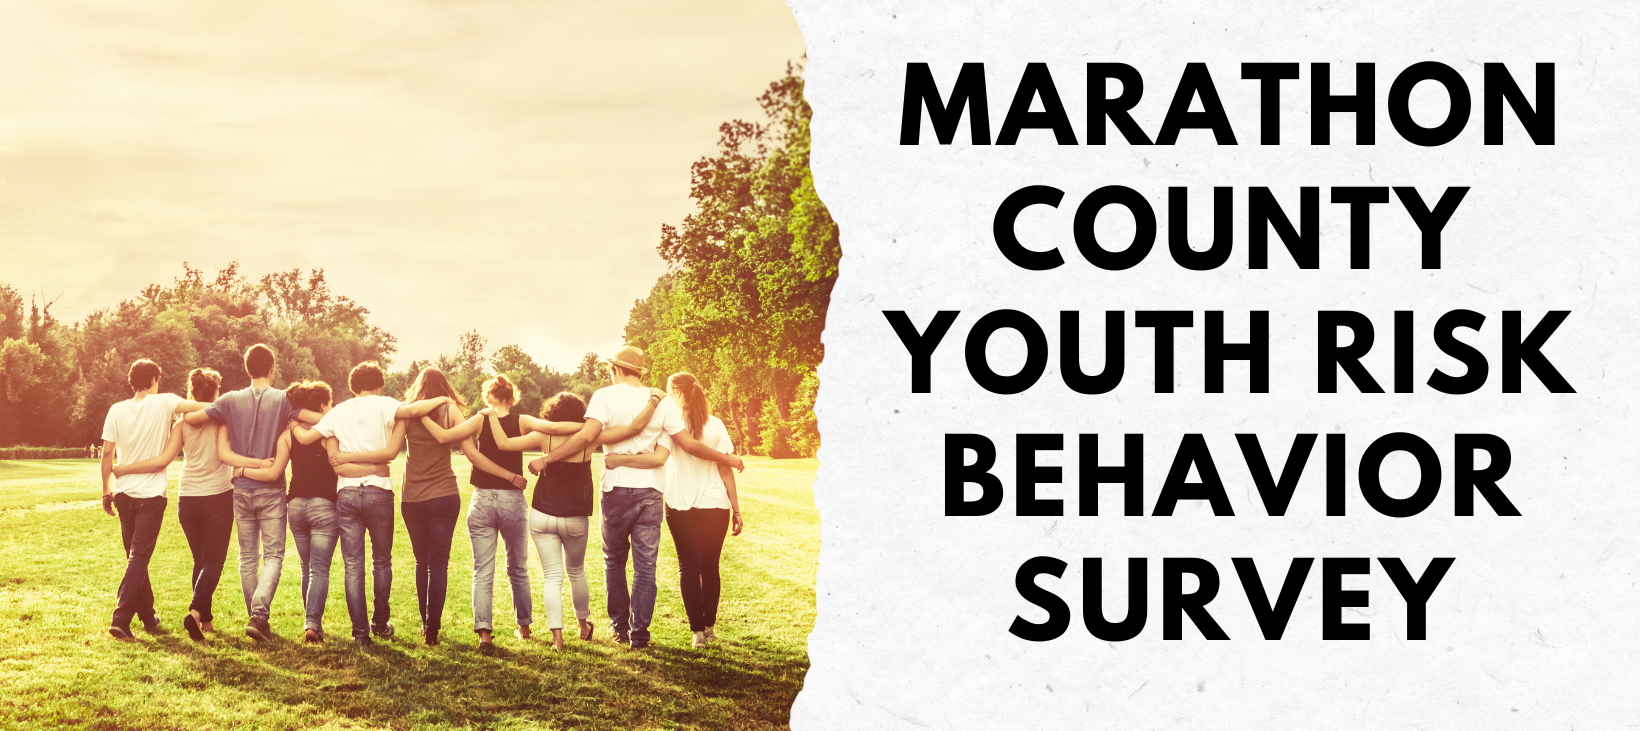 Marathon County Youth Risk Behavior Survey Results